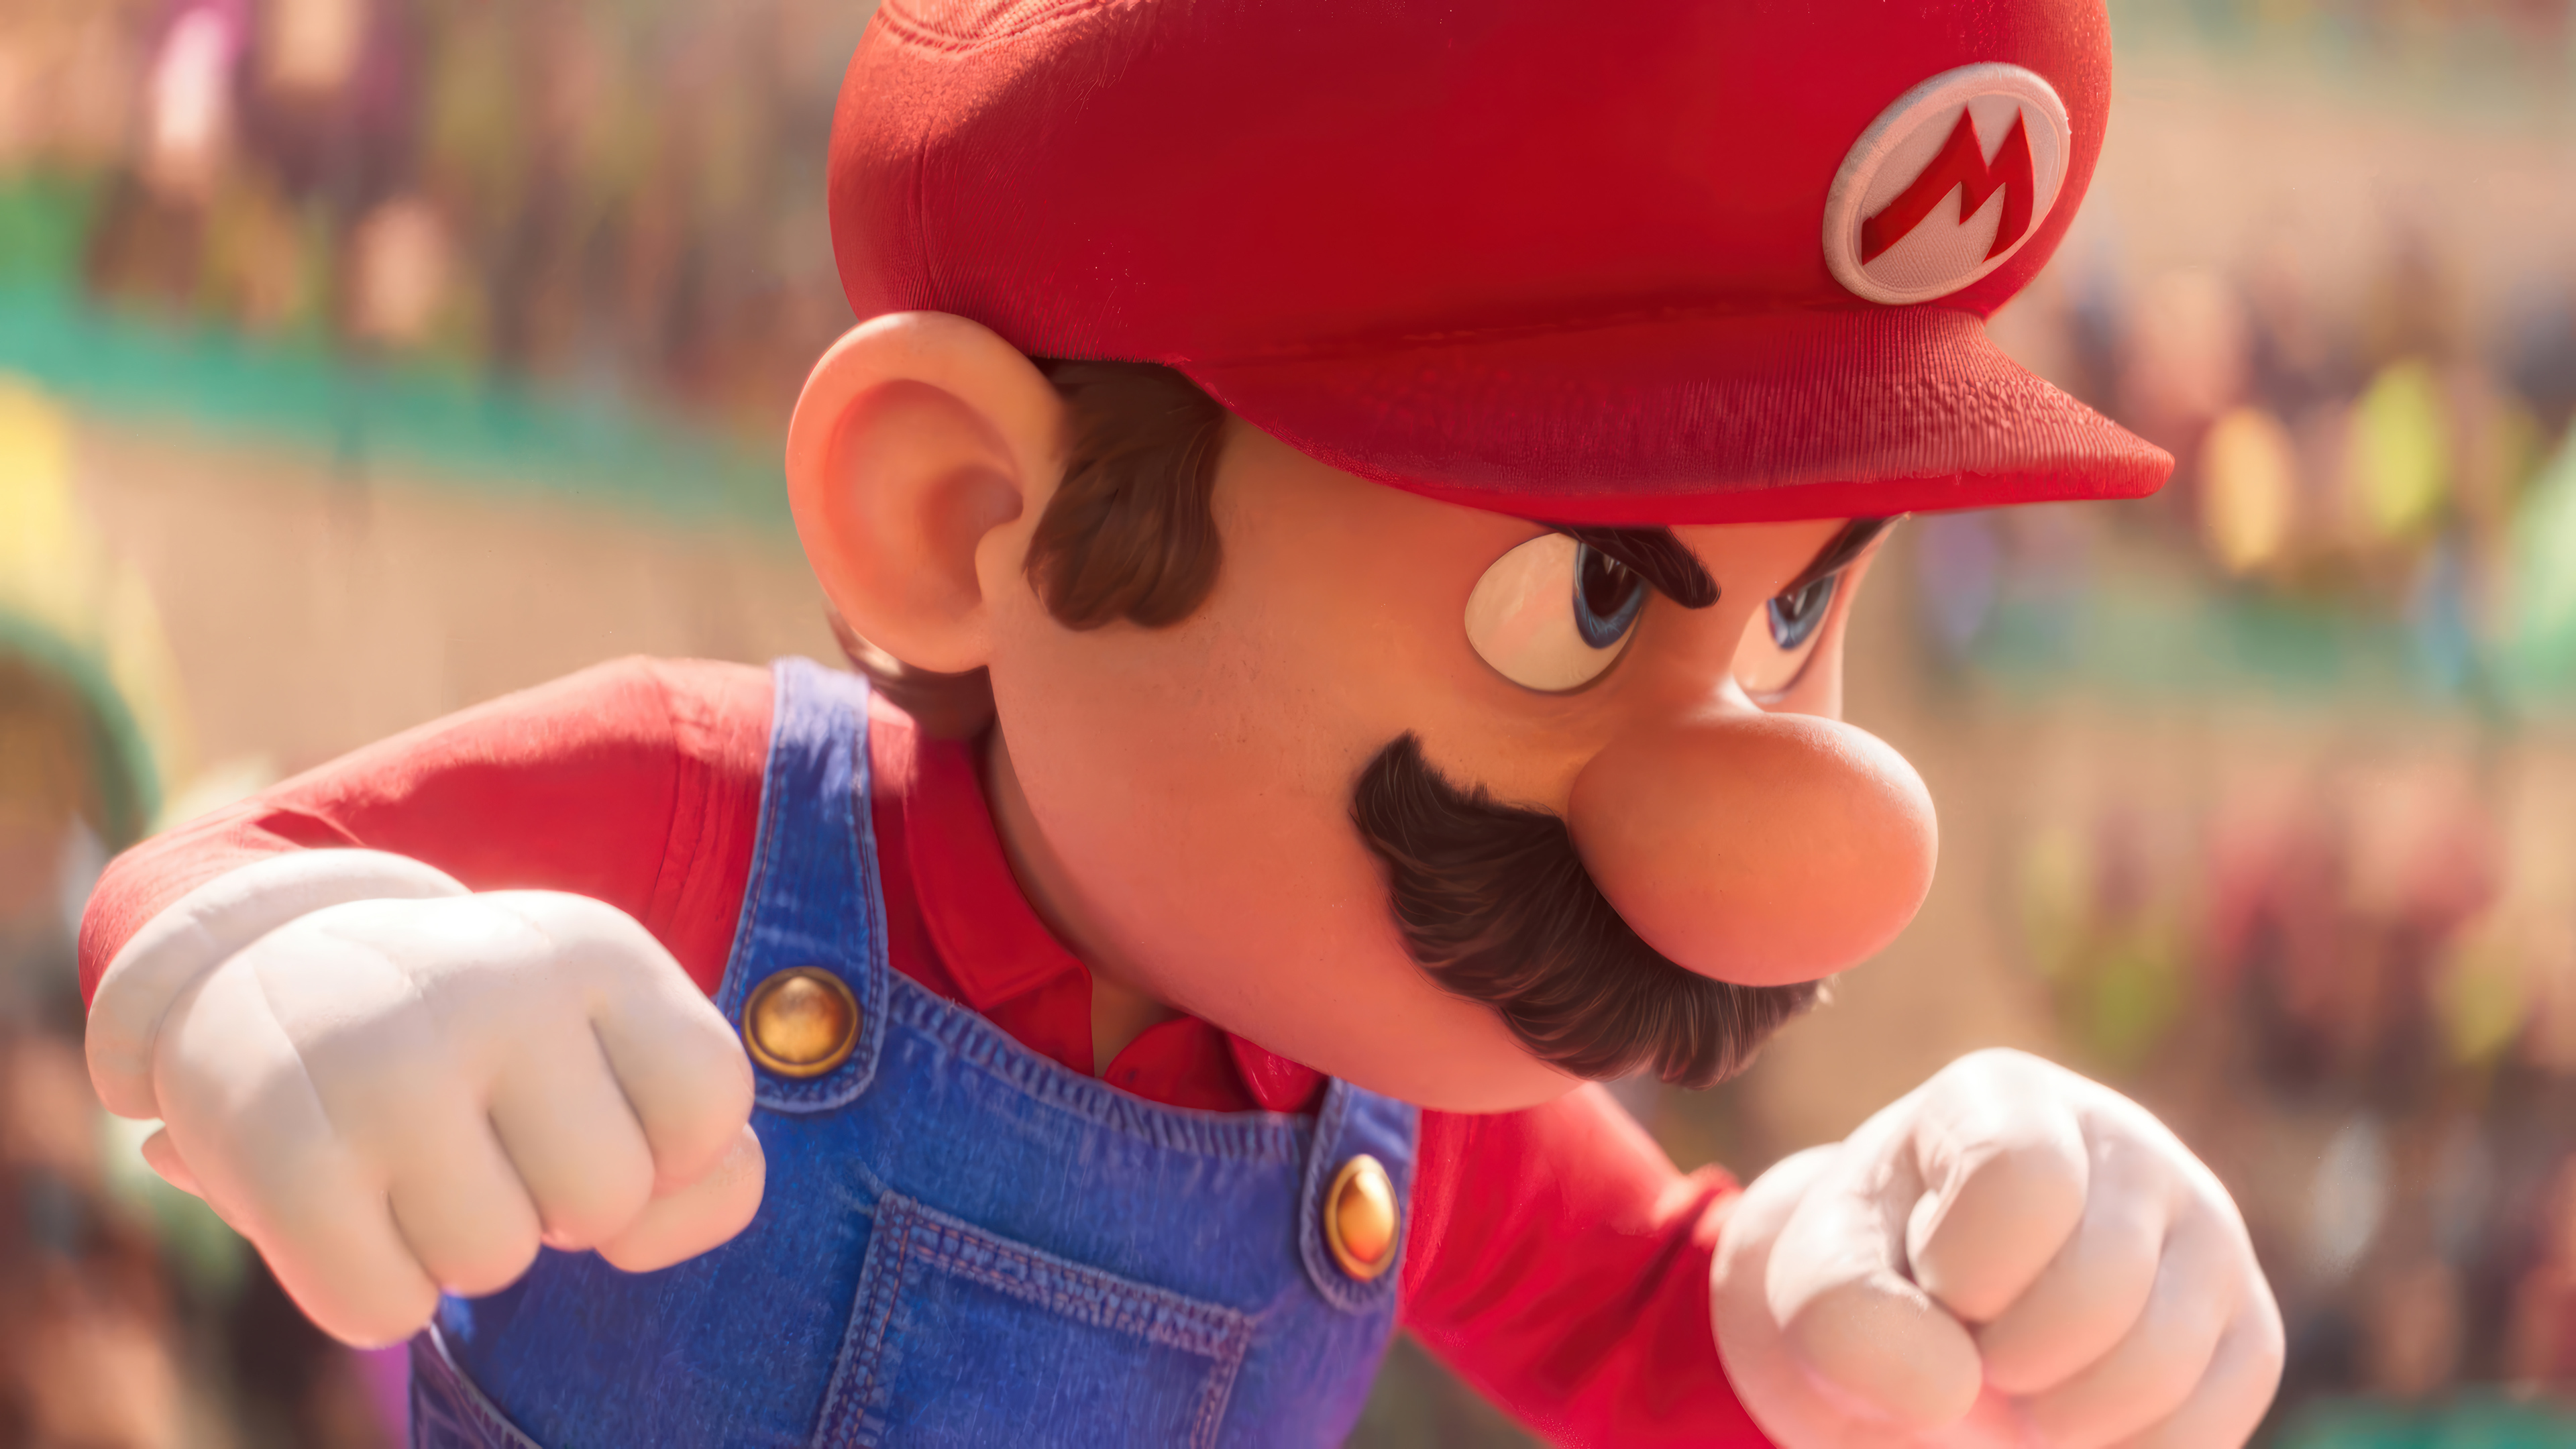 General 3840x2160 Mario movie characters film stills CGI hat gloves moustache